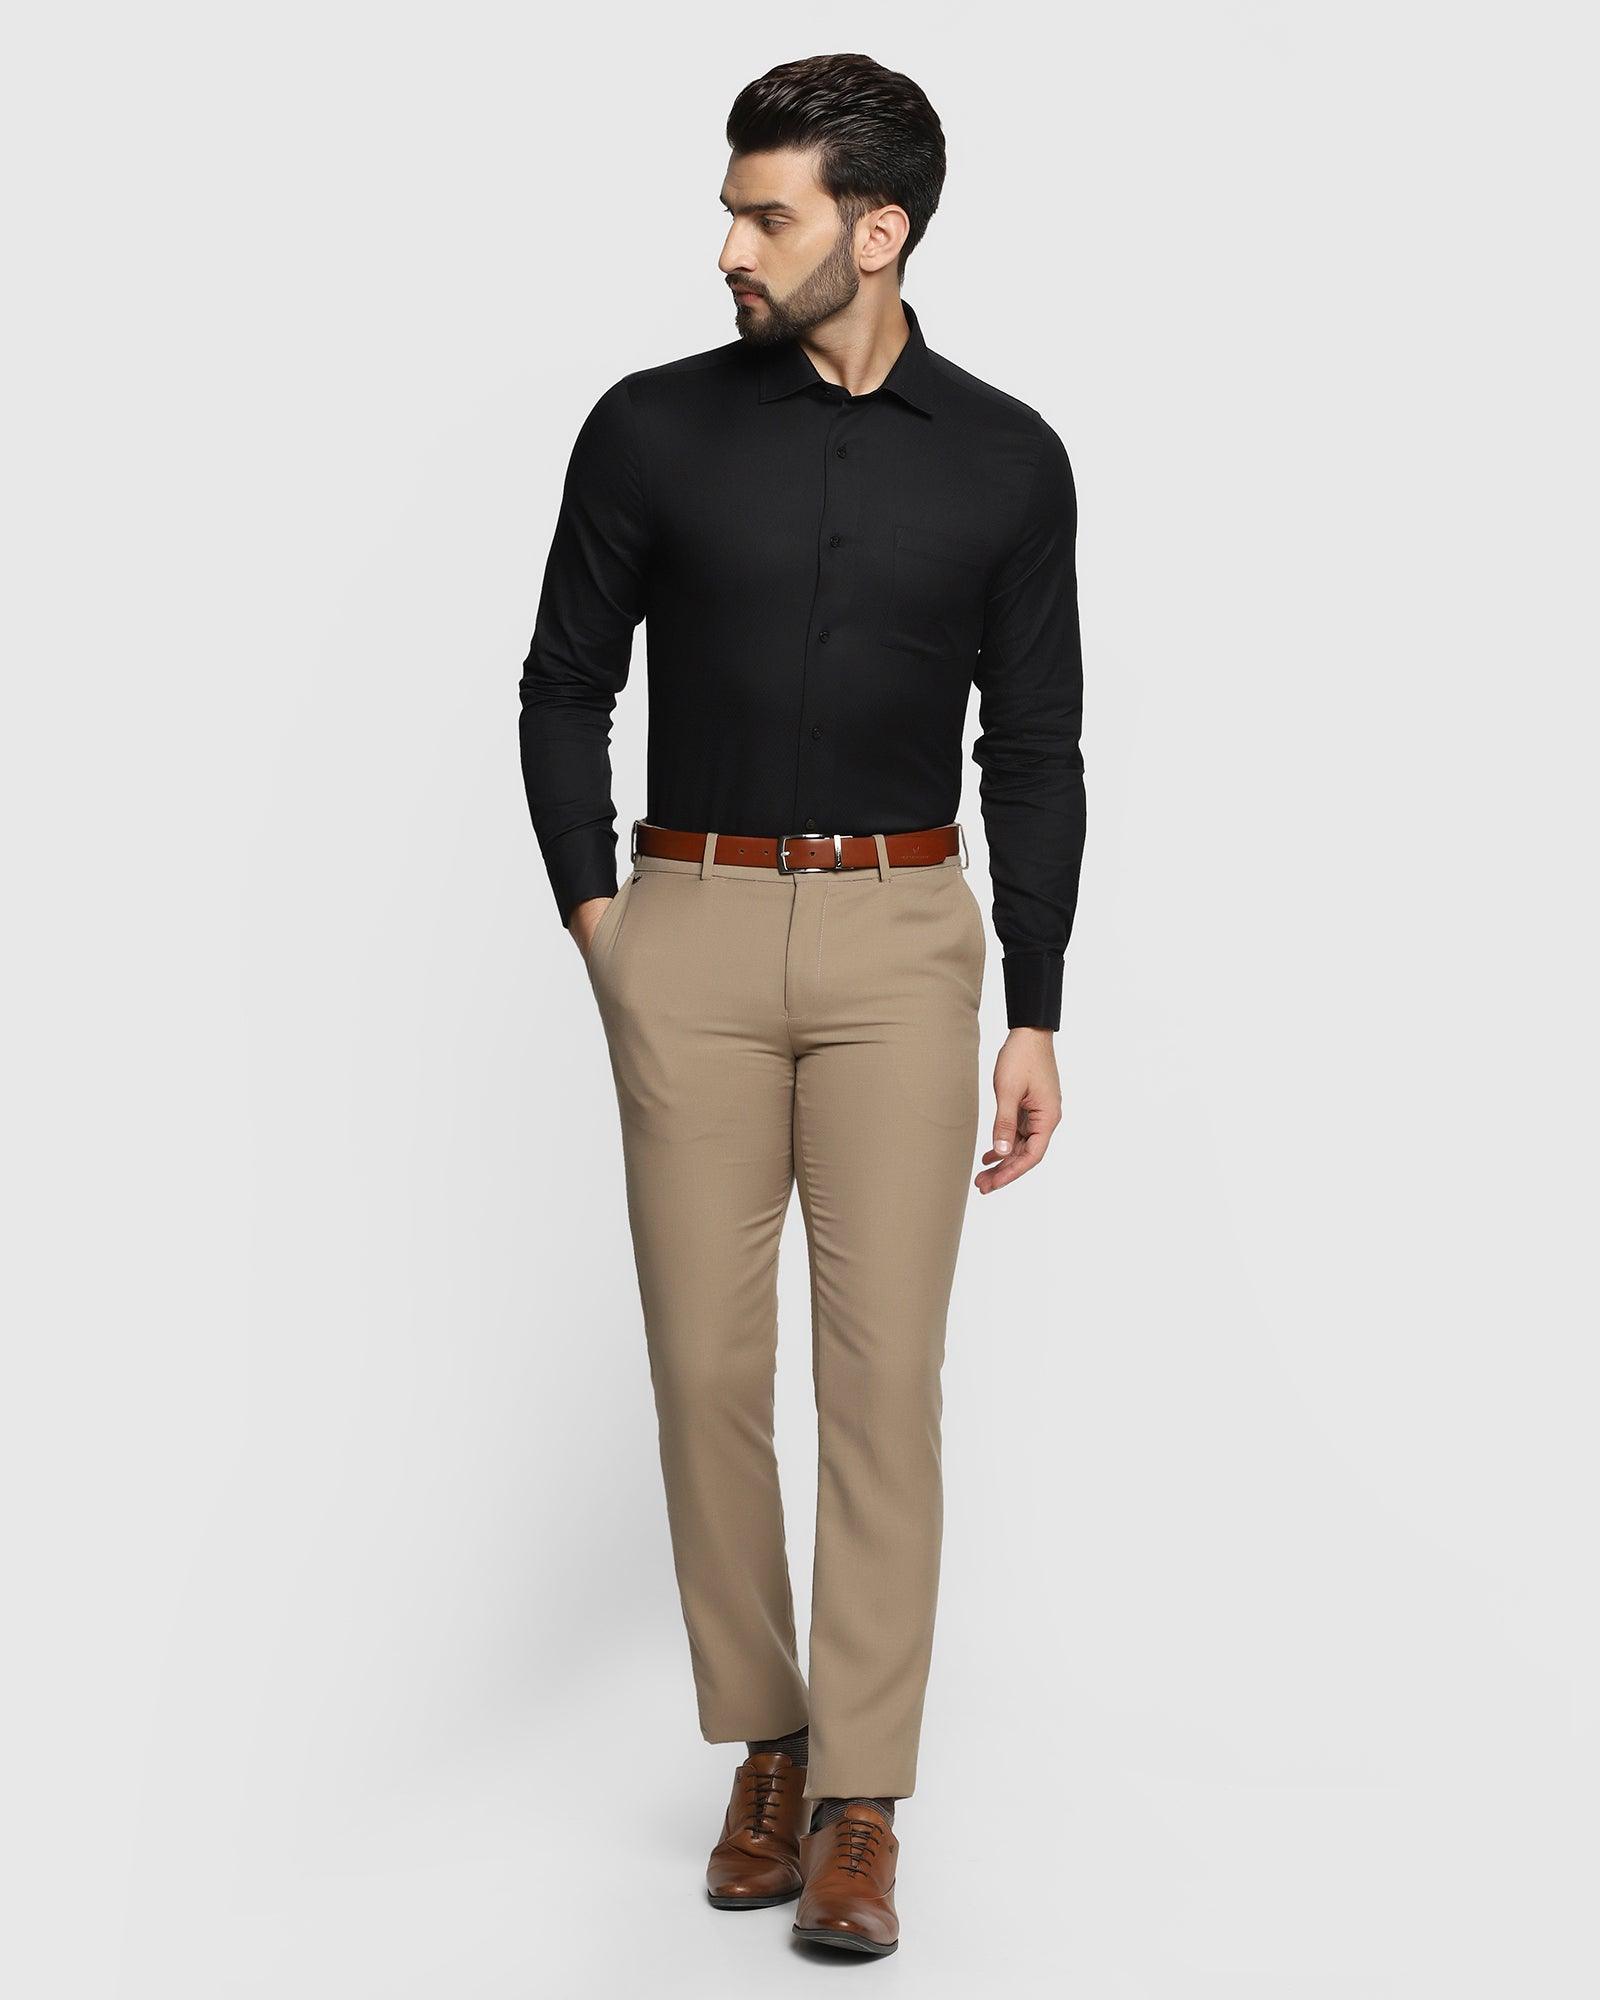 Buy JB Studio Mens Formal Striped Shirt  100 Cotton  Slim Fit  Full  Sleeve  Black at Amazonin